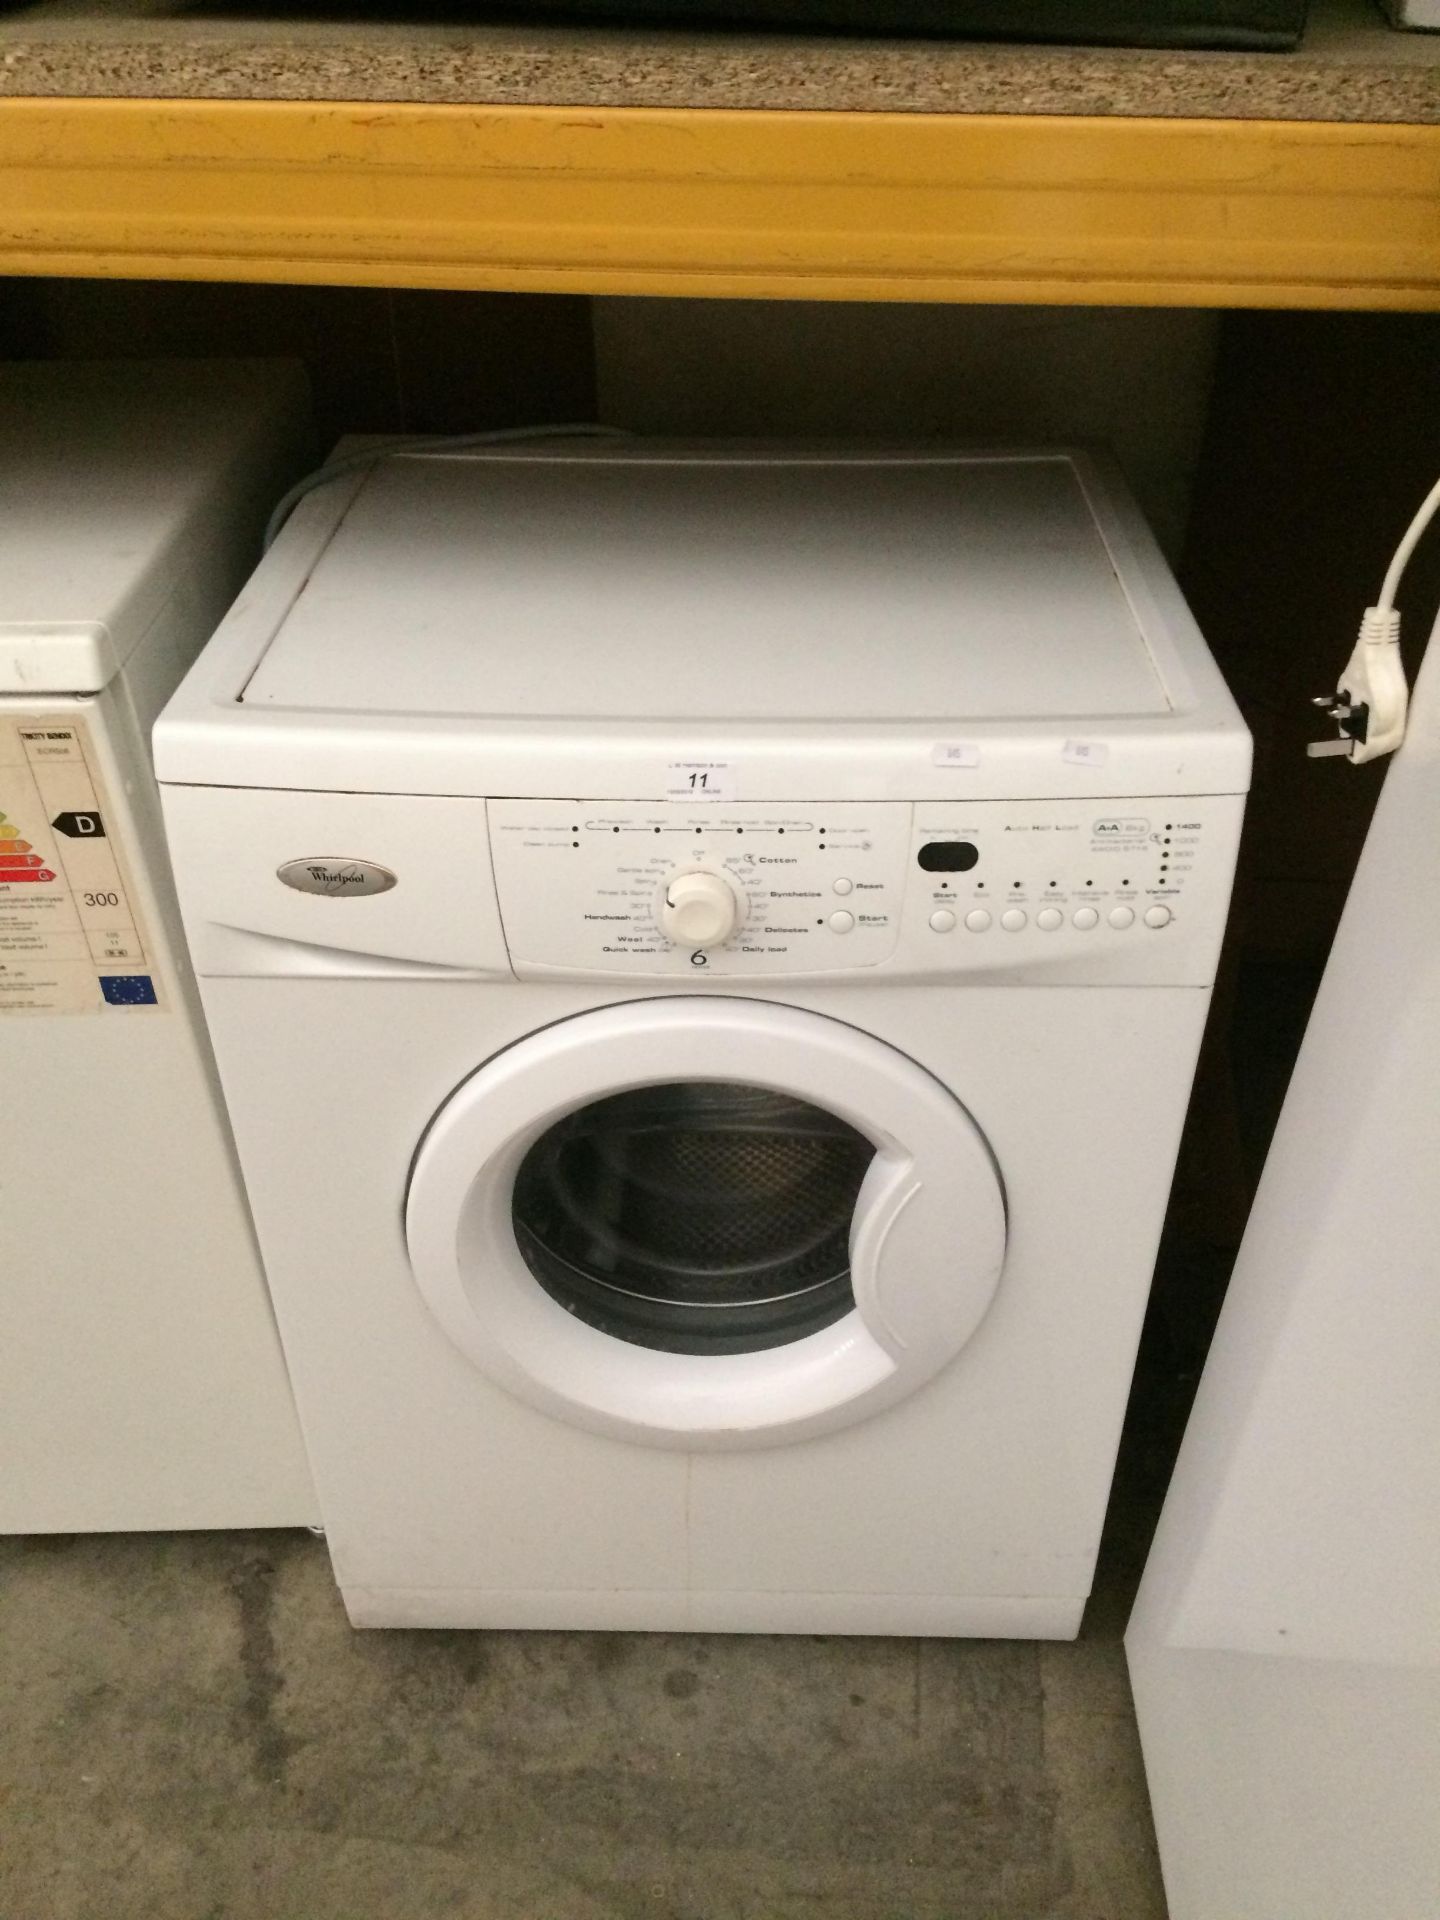 A Whirlpool 6KG washing machine